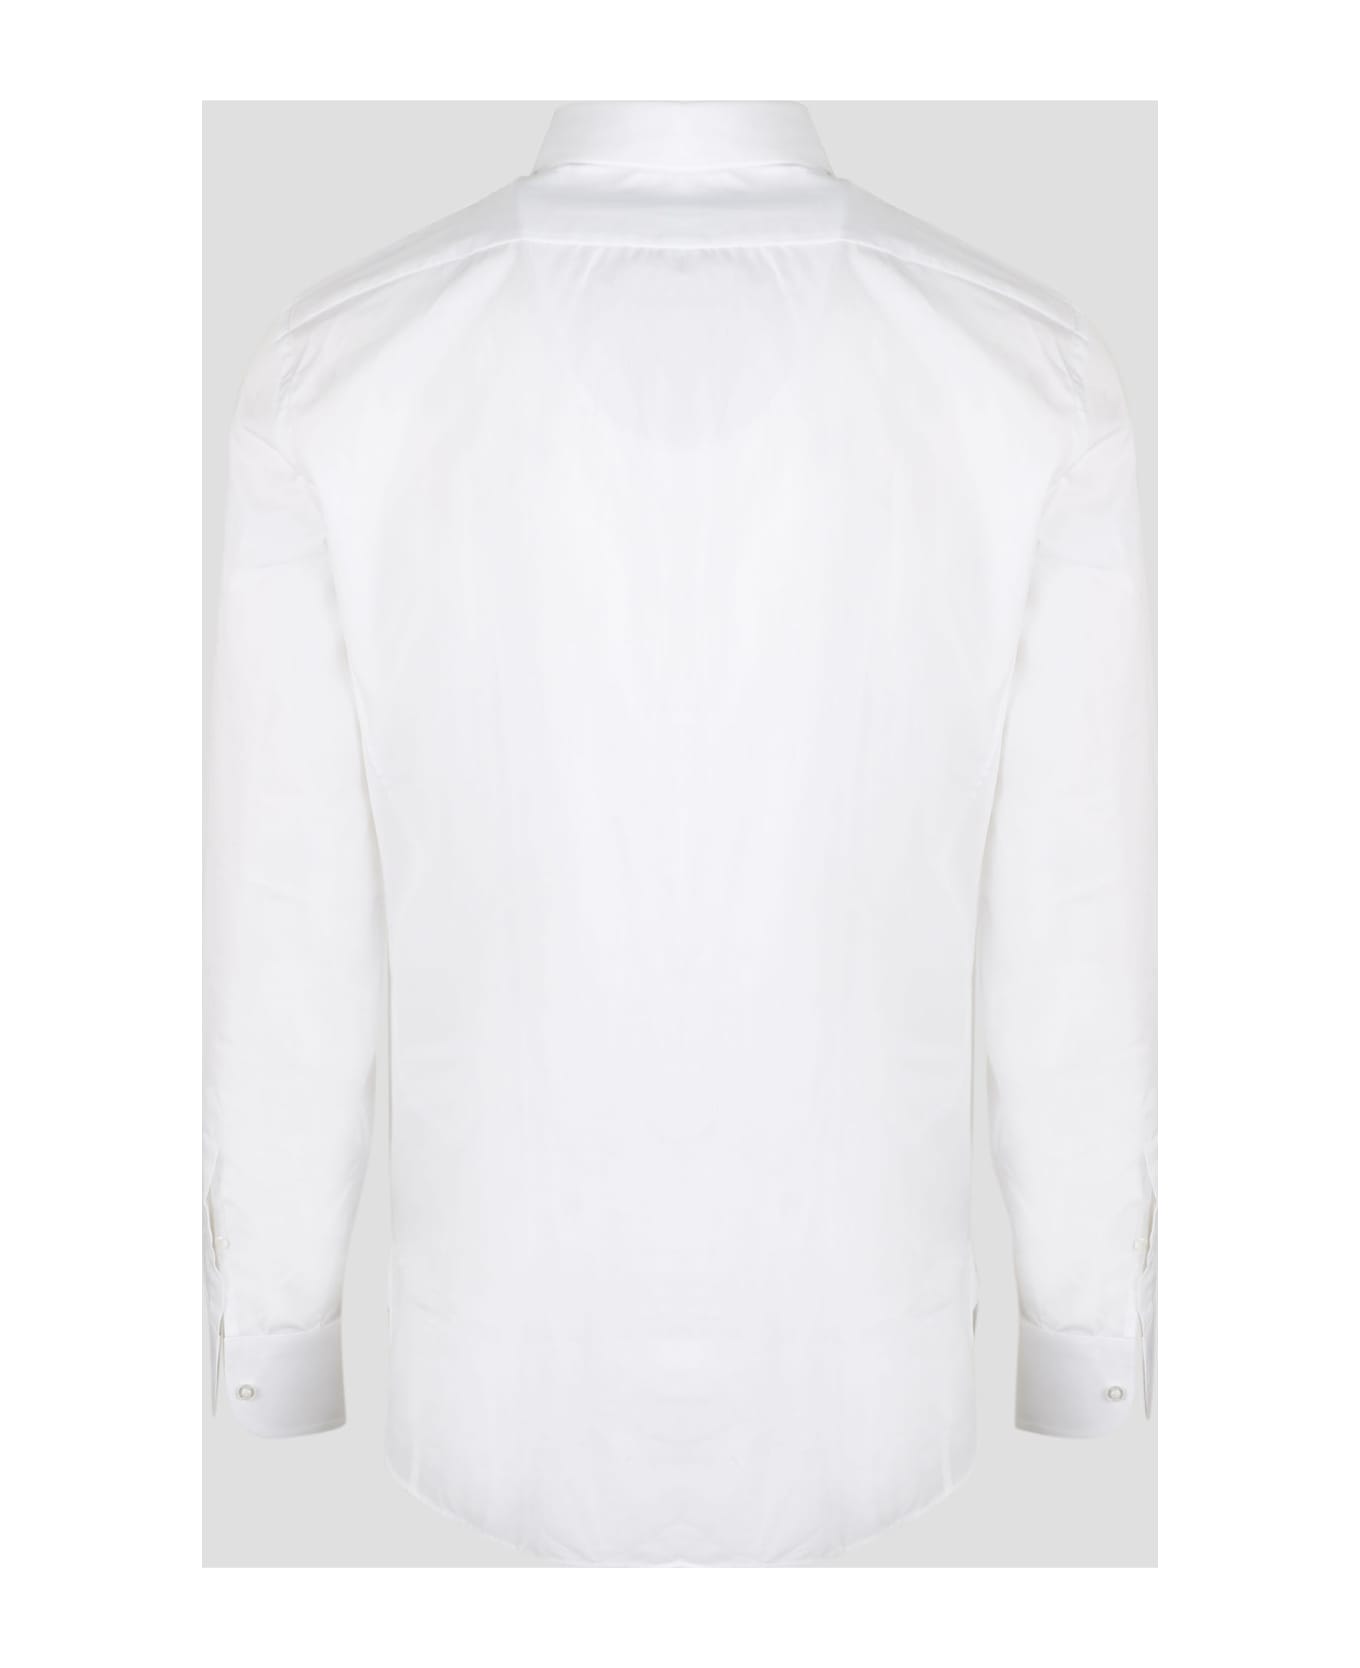 Gucci Tailored Shirt - White